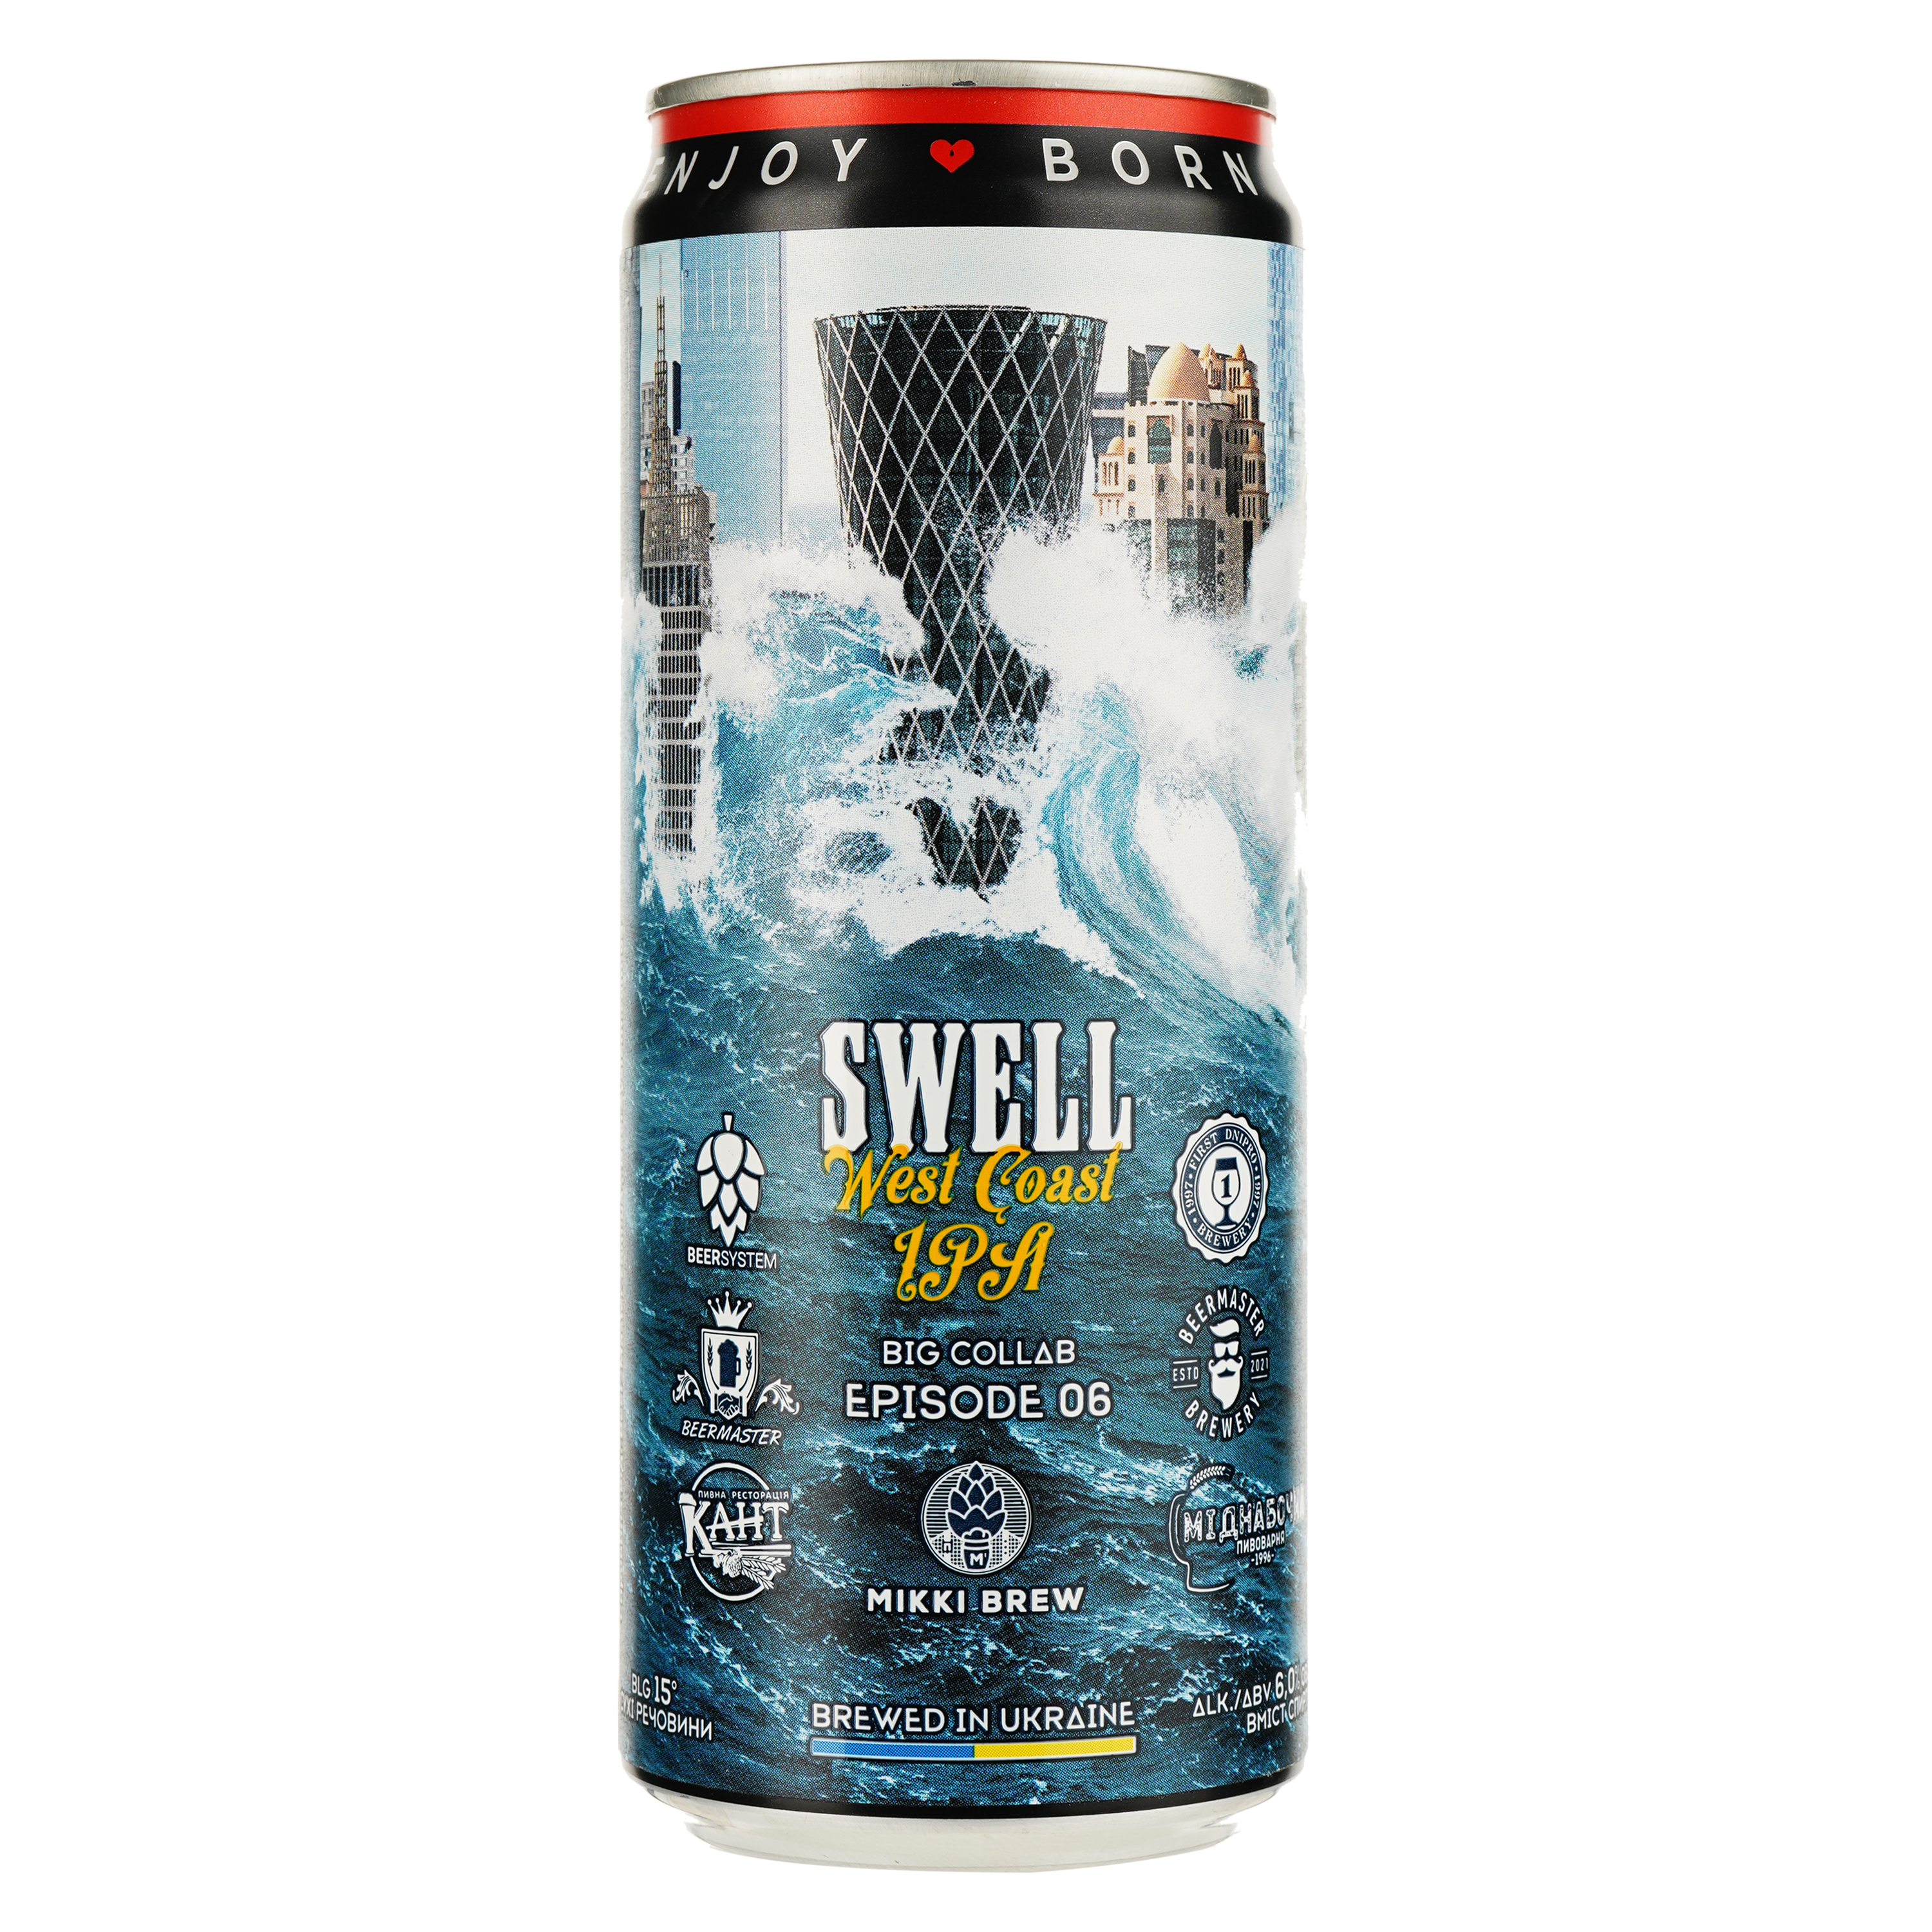 Пиво Mikki Brew Swell West Coast IPA, светлое, нефильтрованное, 6%, ж/б, 0,33 л - фото 1